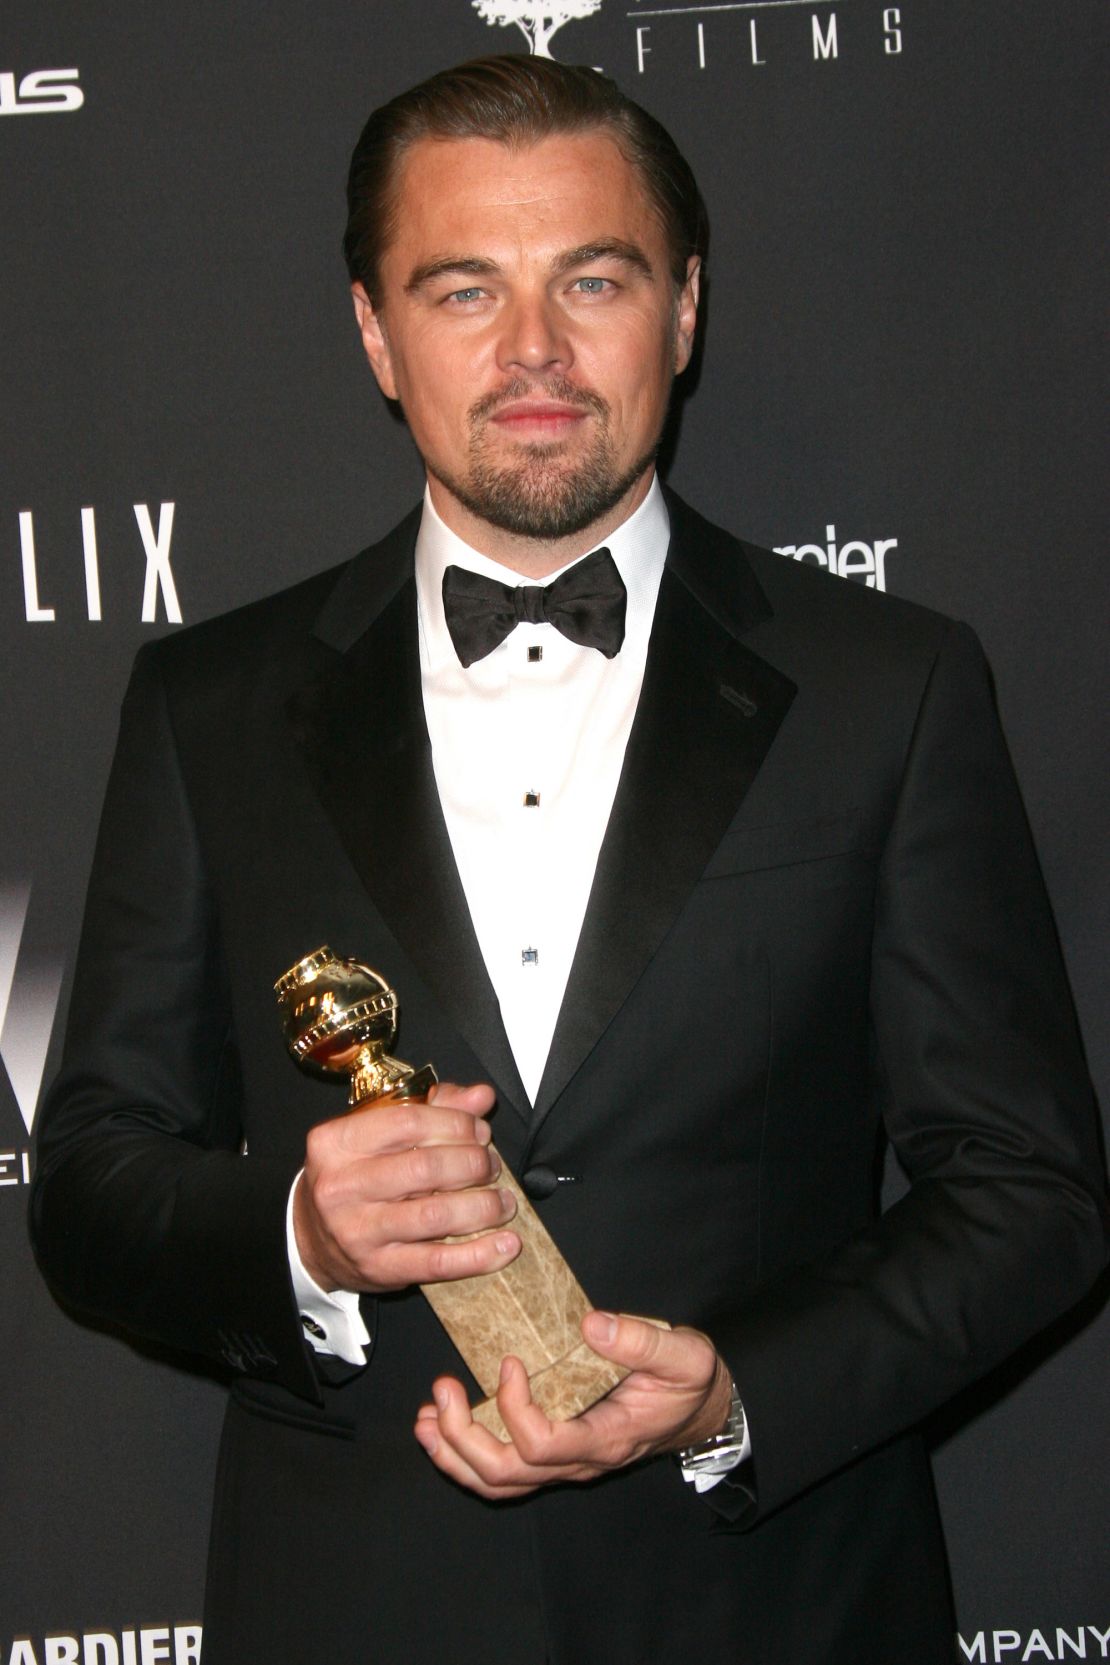 Leonardo DiCaprio is a celebrated actor and philanthropist.
